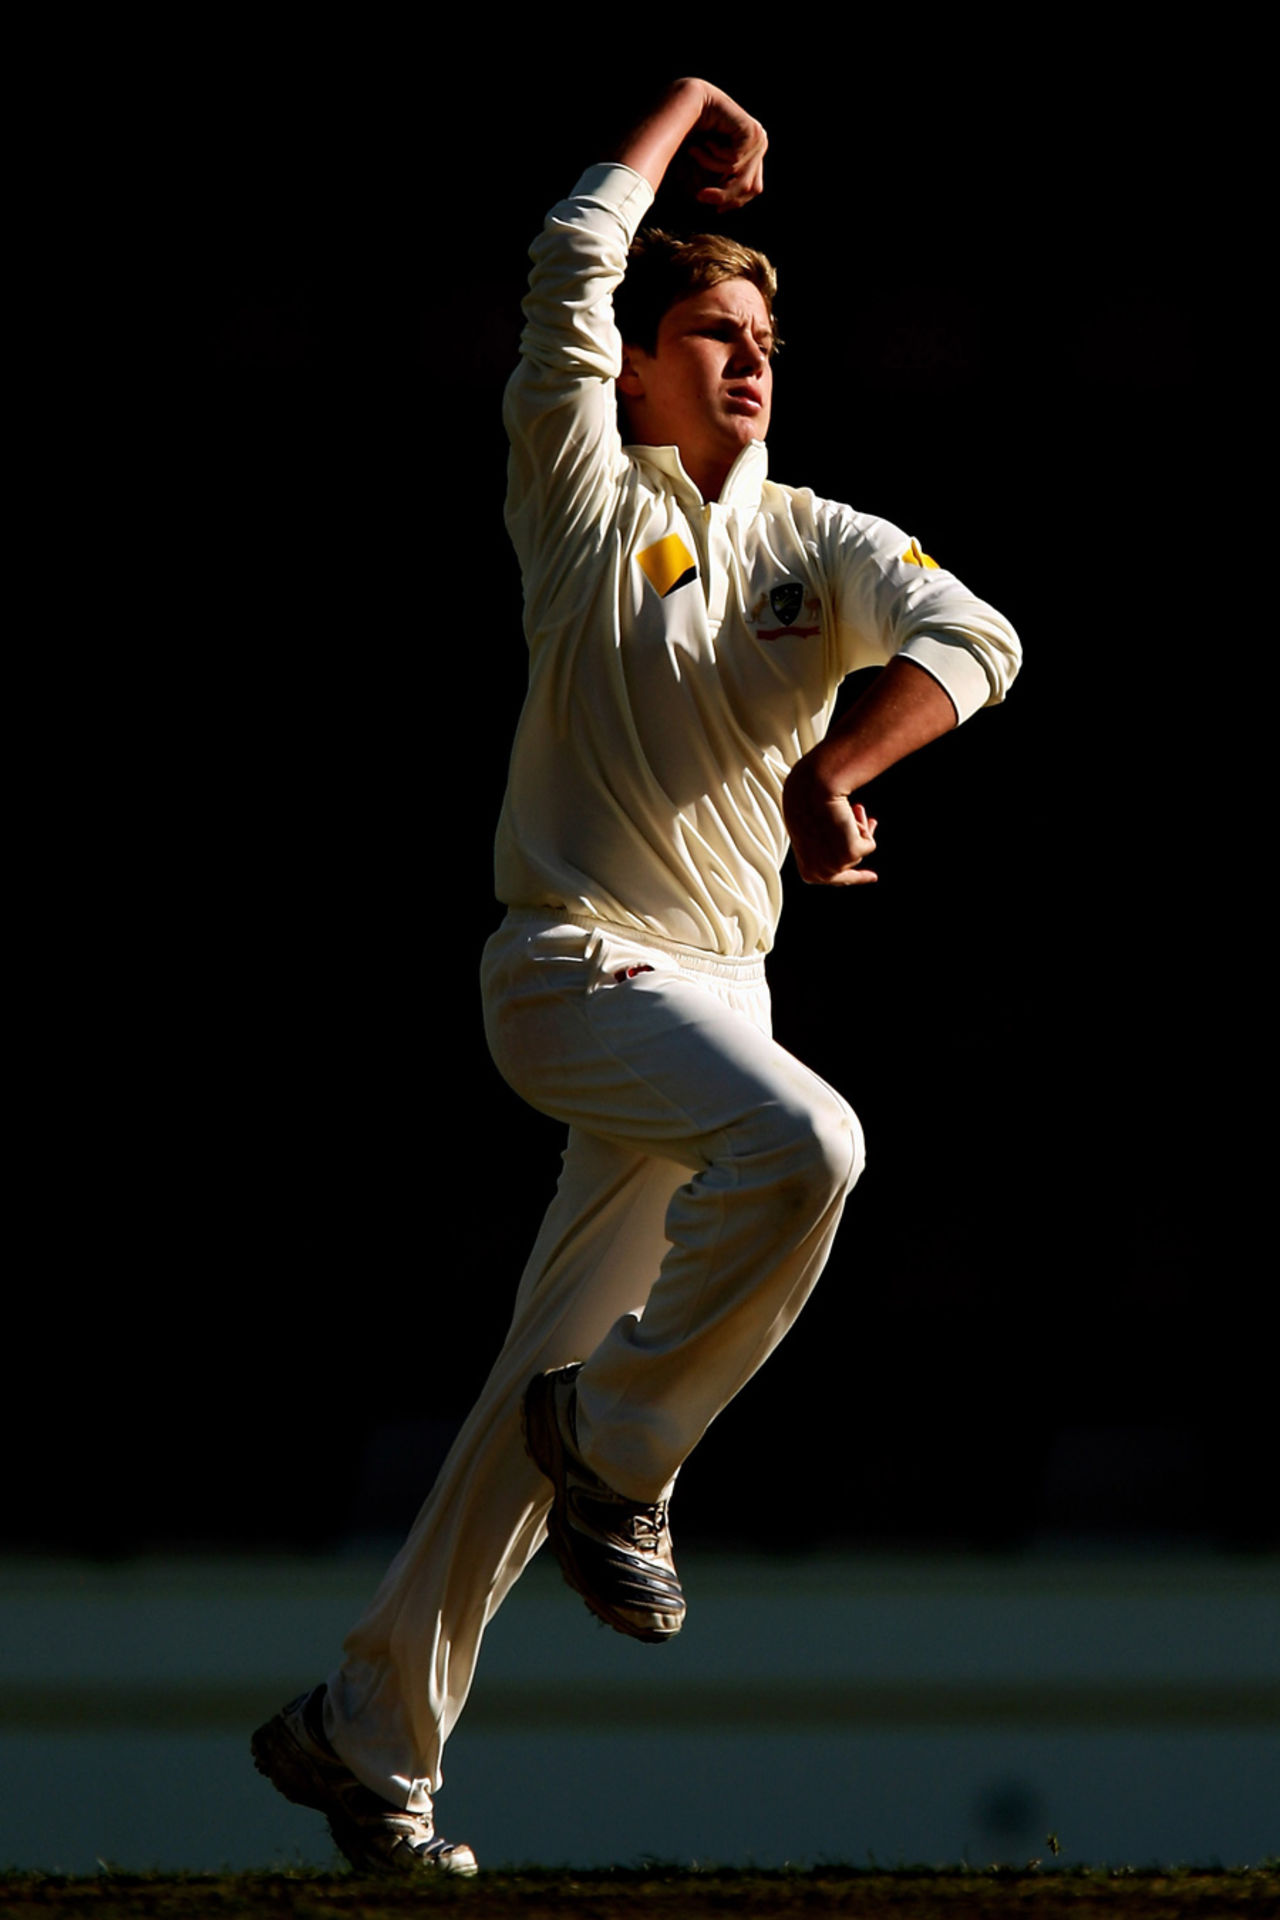 Adam Zampa bowls, Australia Under-19 v India Under-19, 1st Test, Hobart, 3rd day, April 13, 2009